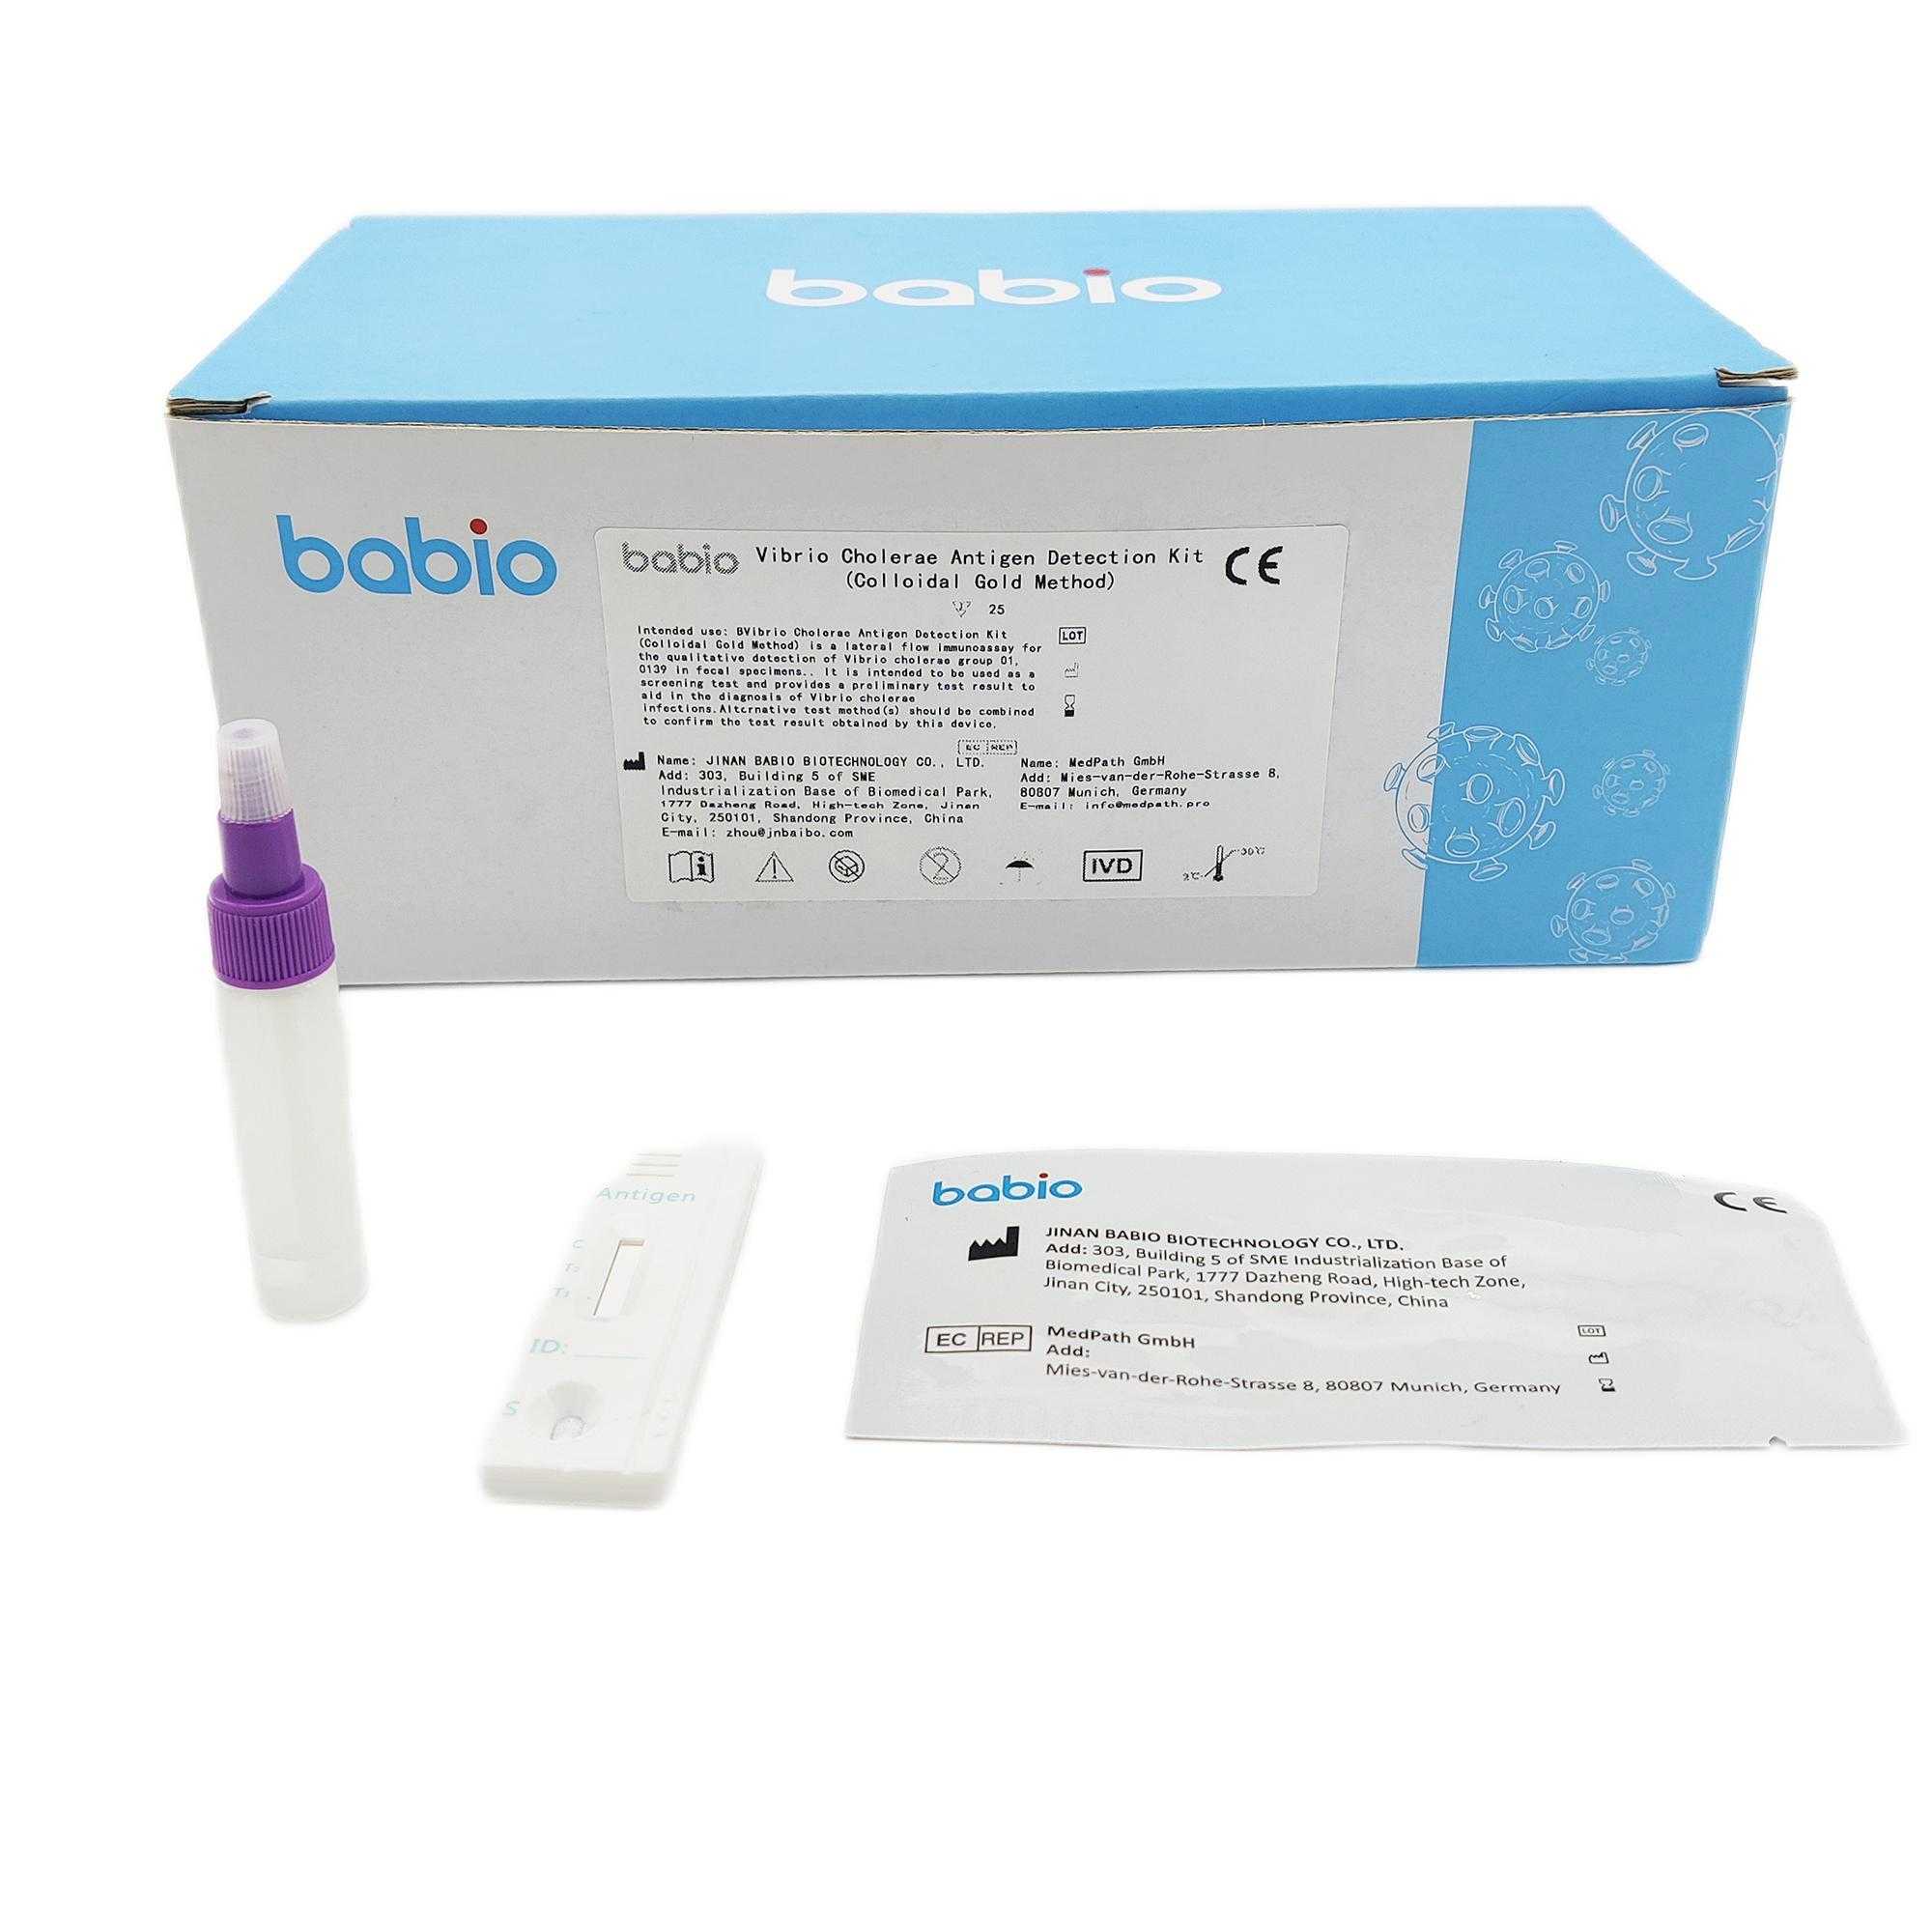 Vibrio Cholerae Antigen Detection Kit (Colloidal Gold Method)